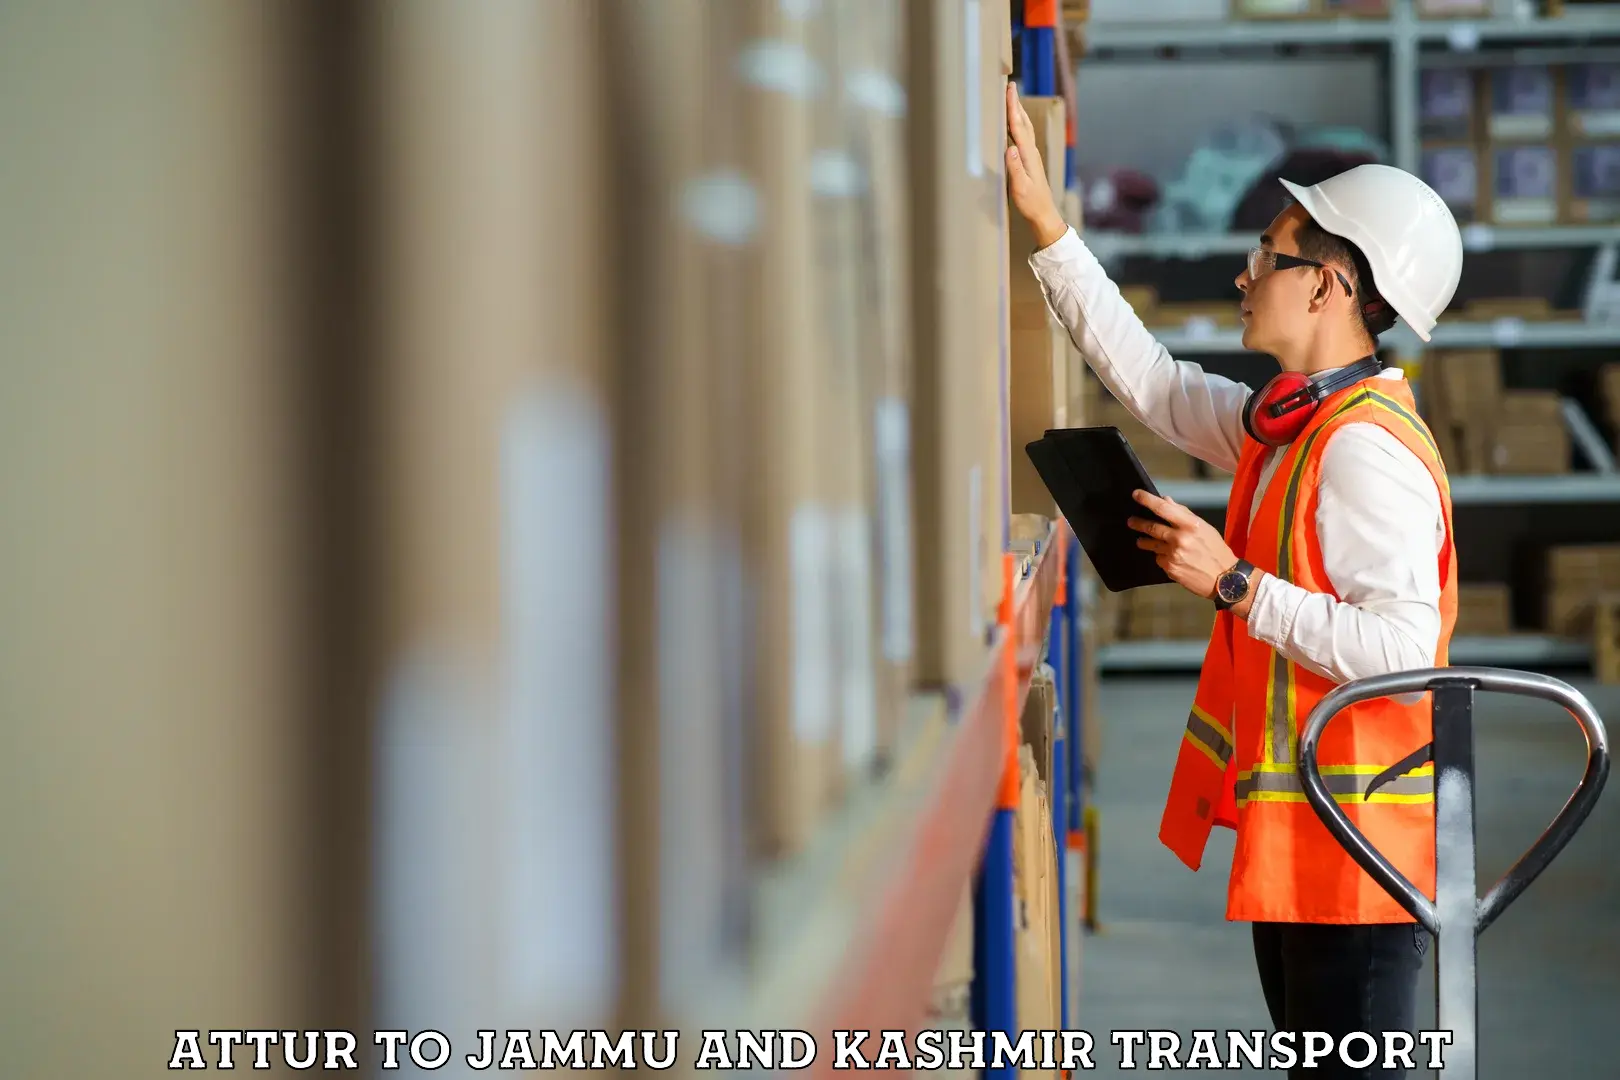 Online transport service Attur to Jammu and Kashmir